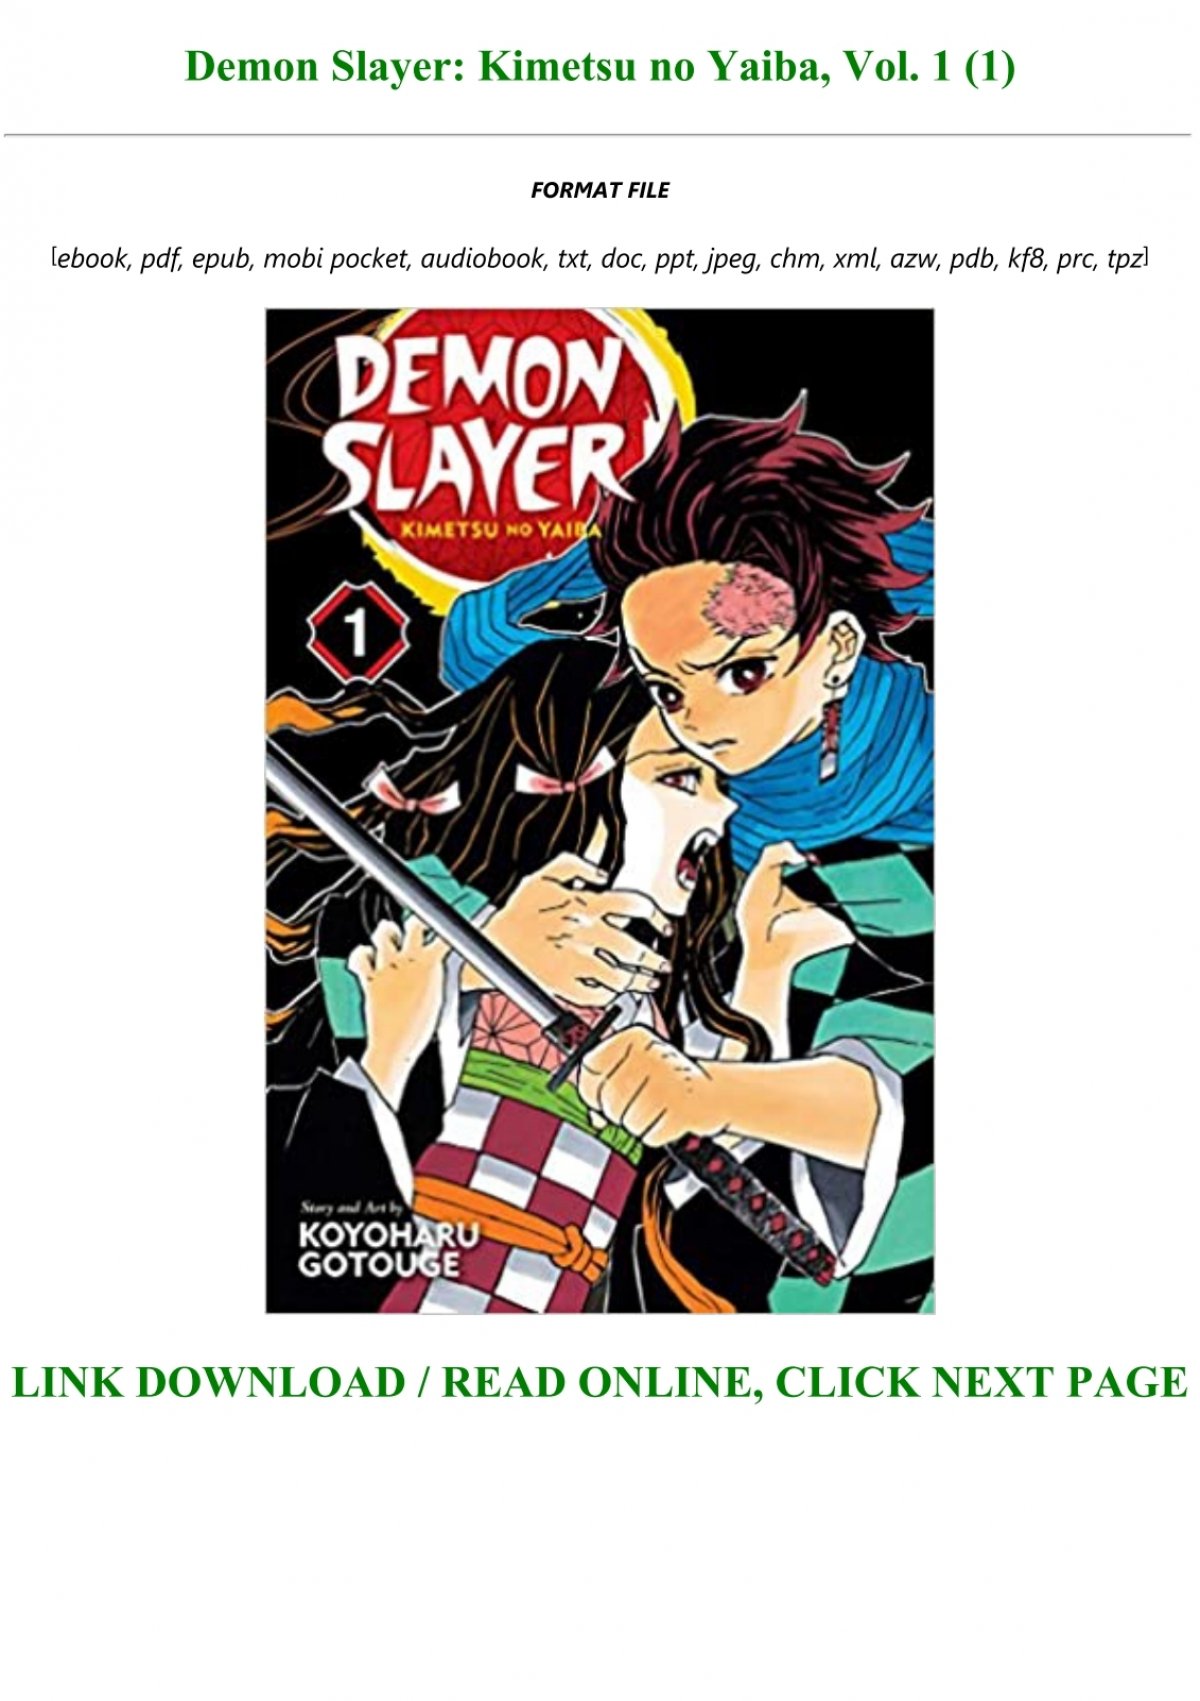 Read Pdf Demon Slayer Kimetsu No Yaiba Vol 1 1 Full Books